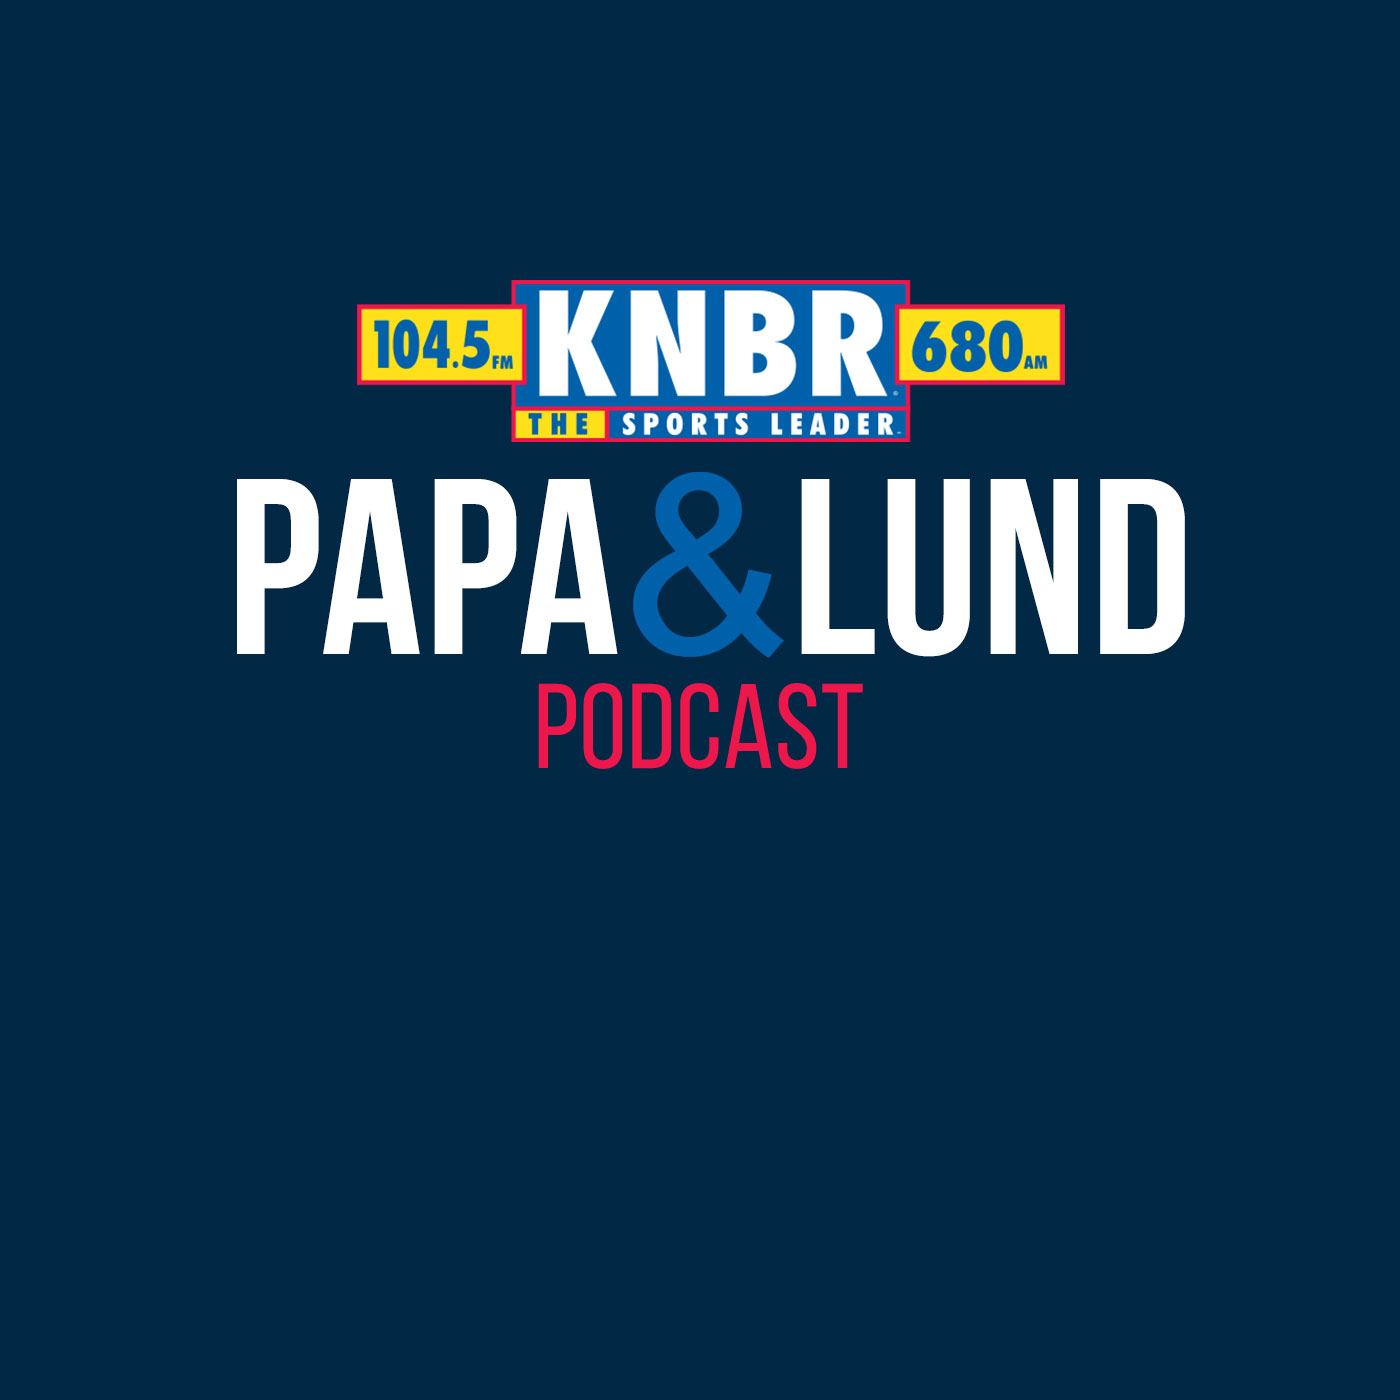 2-10 Superstar DJ Diplo joins Papa & Lund from Super Bowl Radio Row